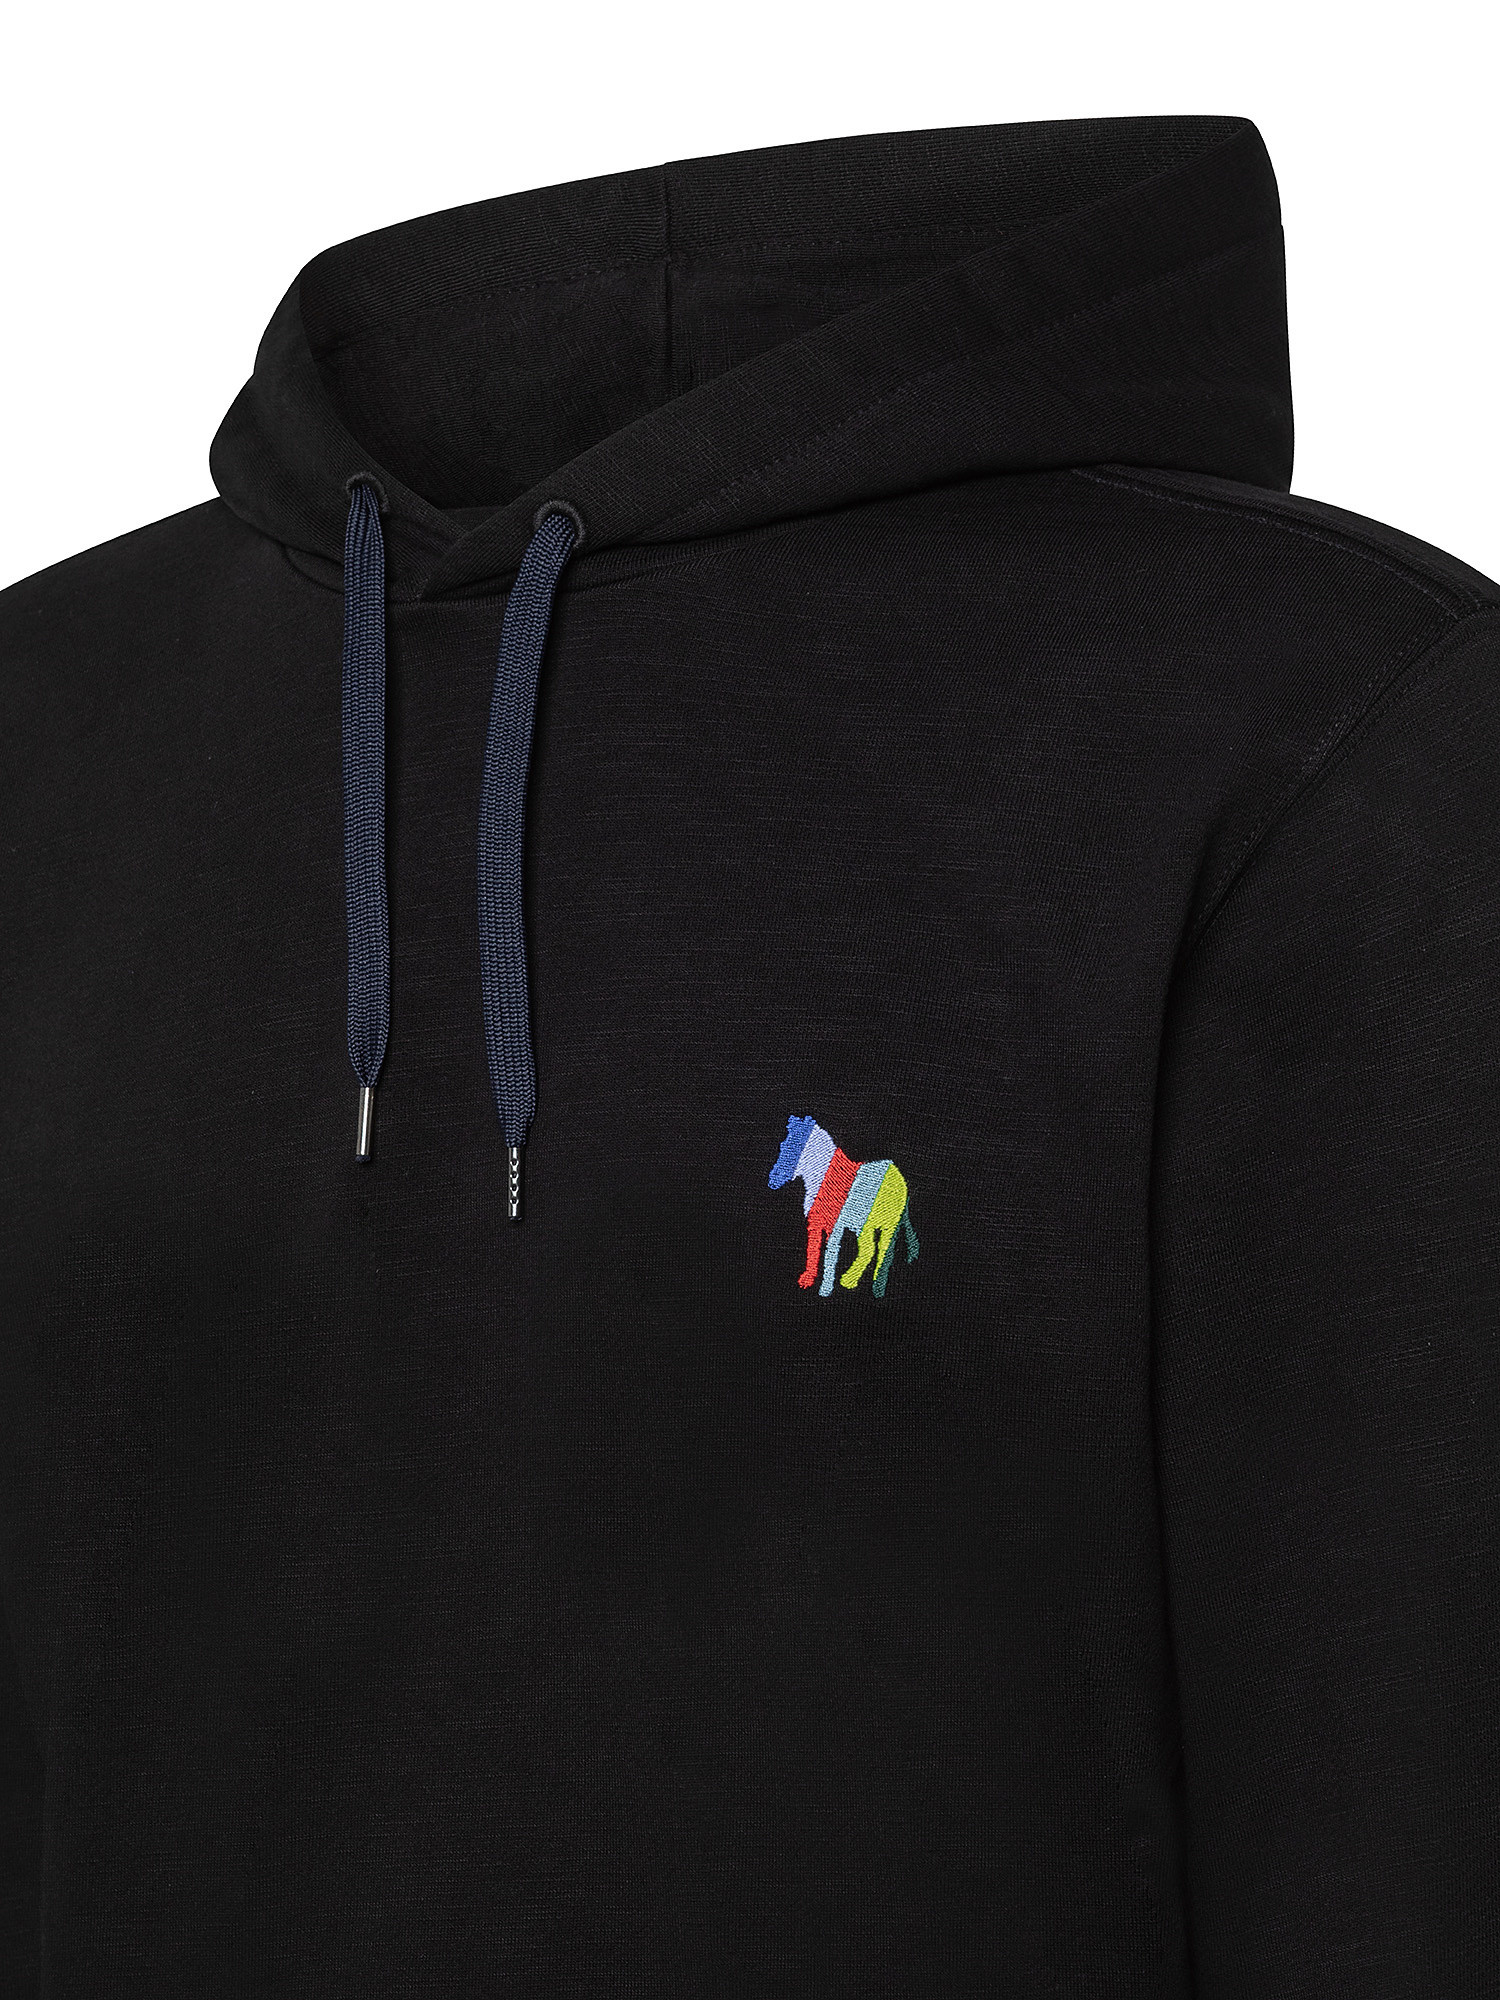 Men's hooded sweatshirt with zebra logo embroidery, Black, large image number 2